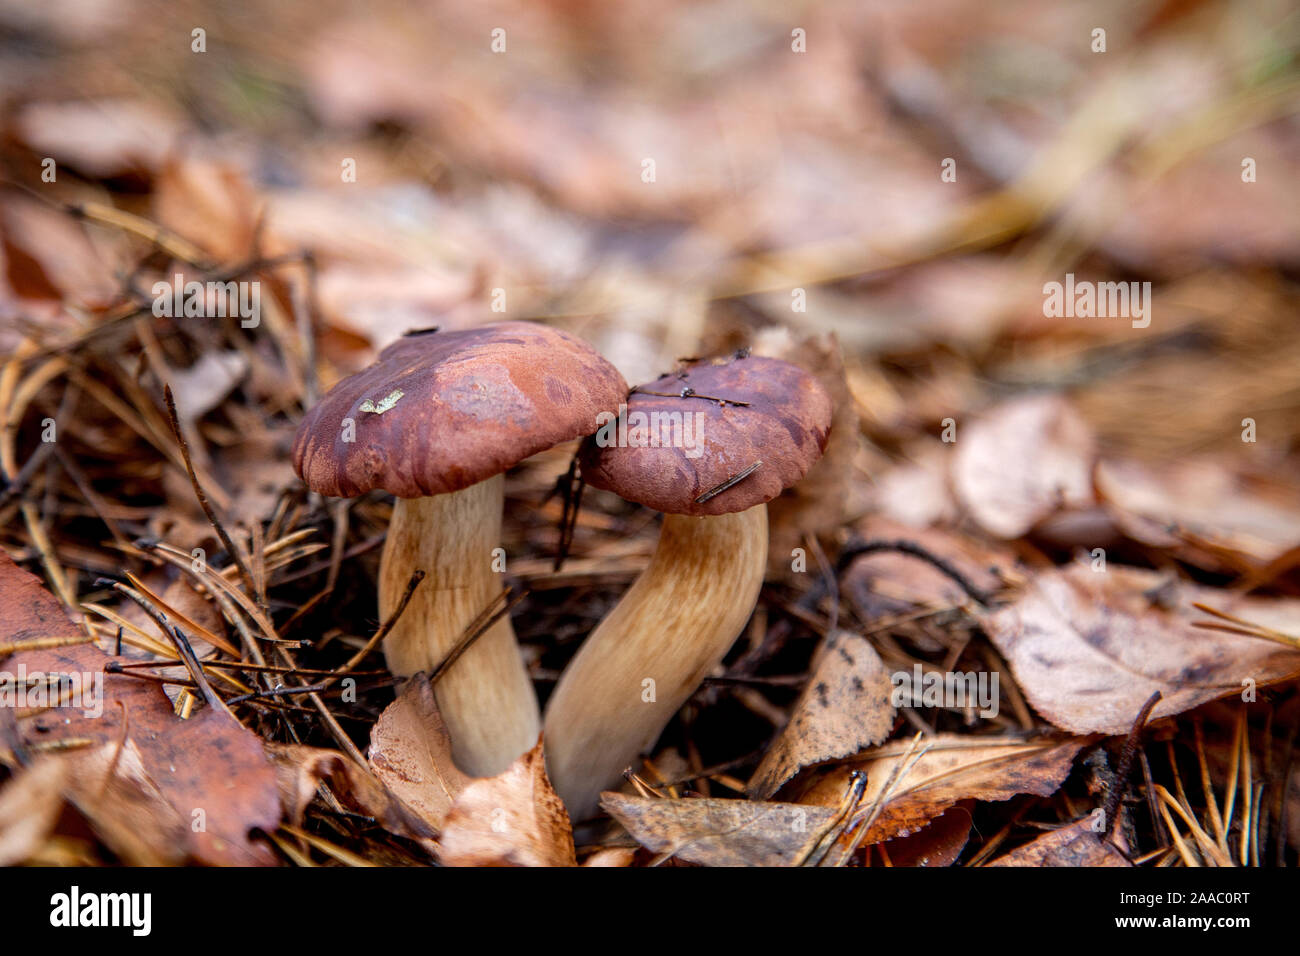 Close up view of double mushroom boletus badius, imleria badia or bay bolete growing in an autumn pine tree forest. Edible and pored fungus has velvet Stock Photo